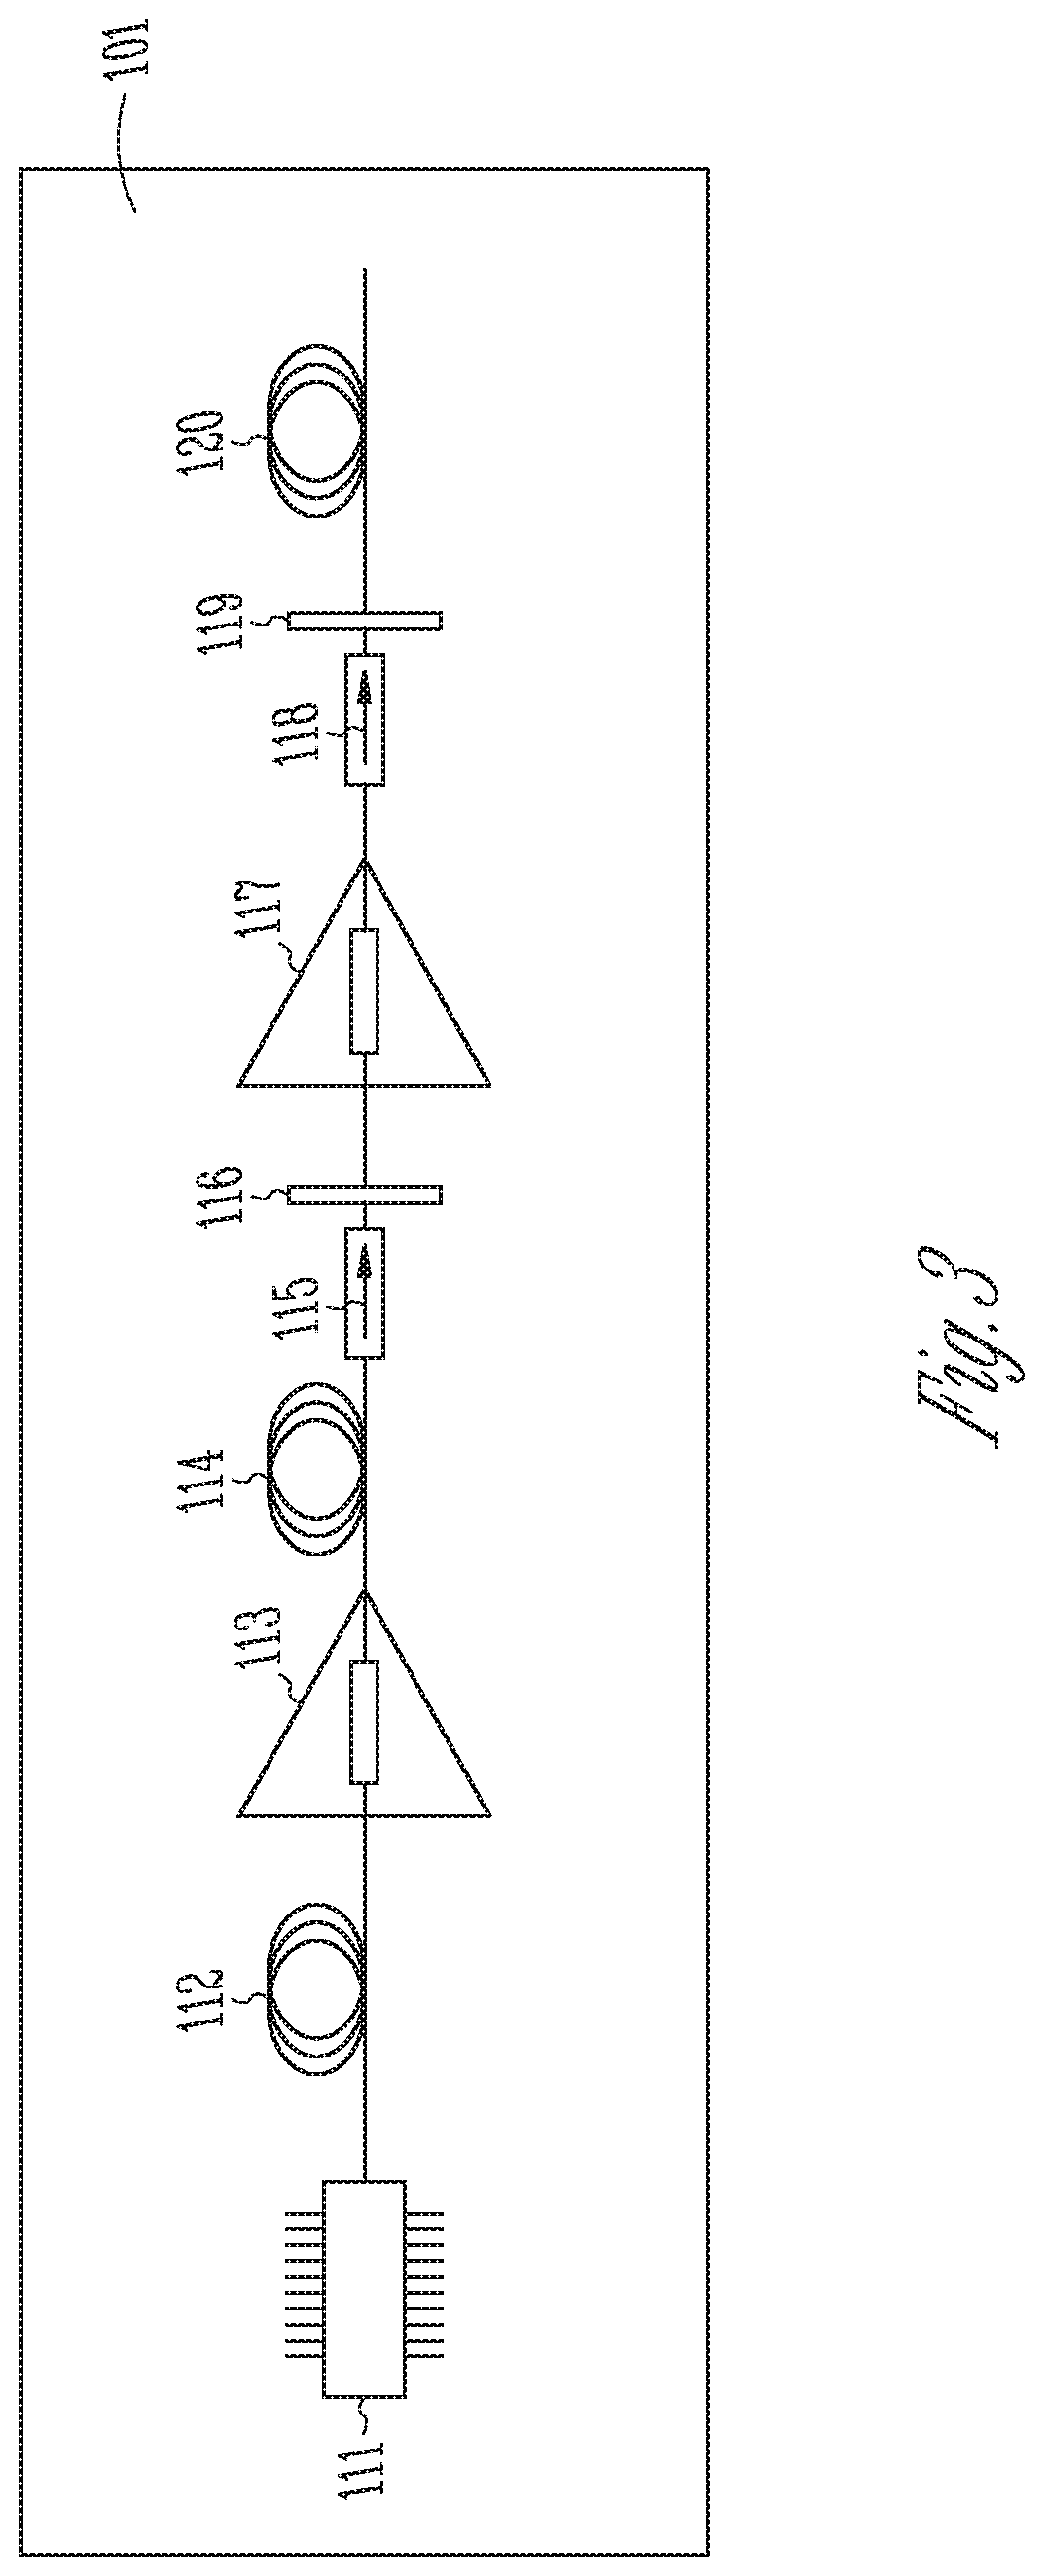 Modular three-dimensional optical sensing system